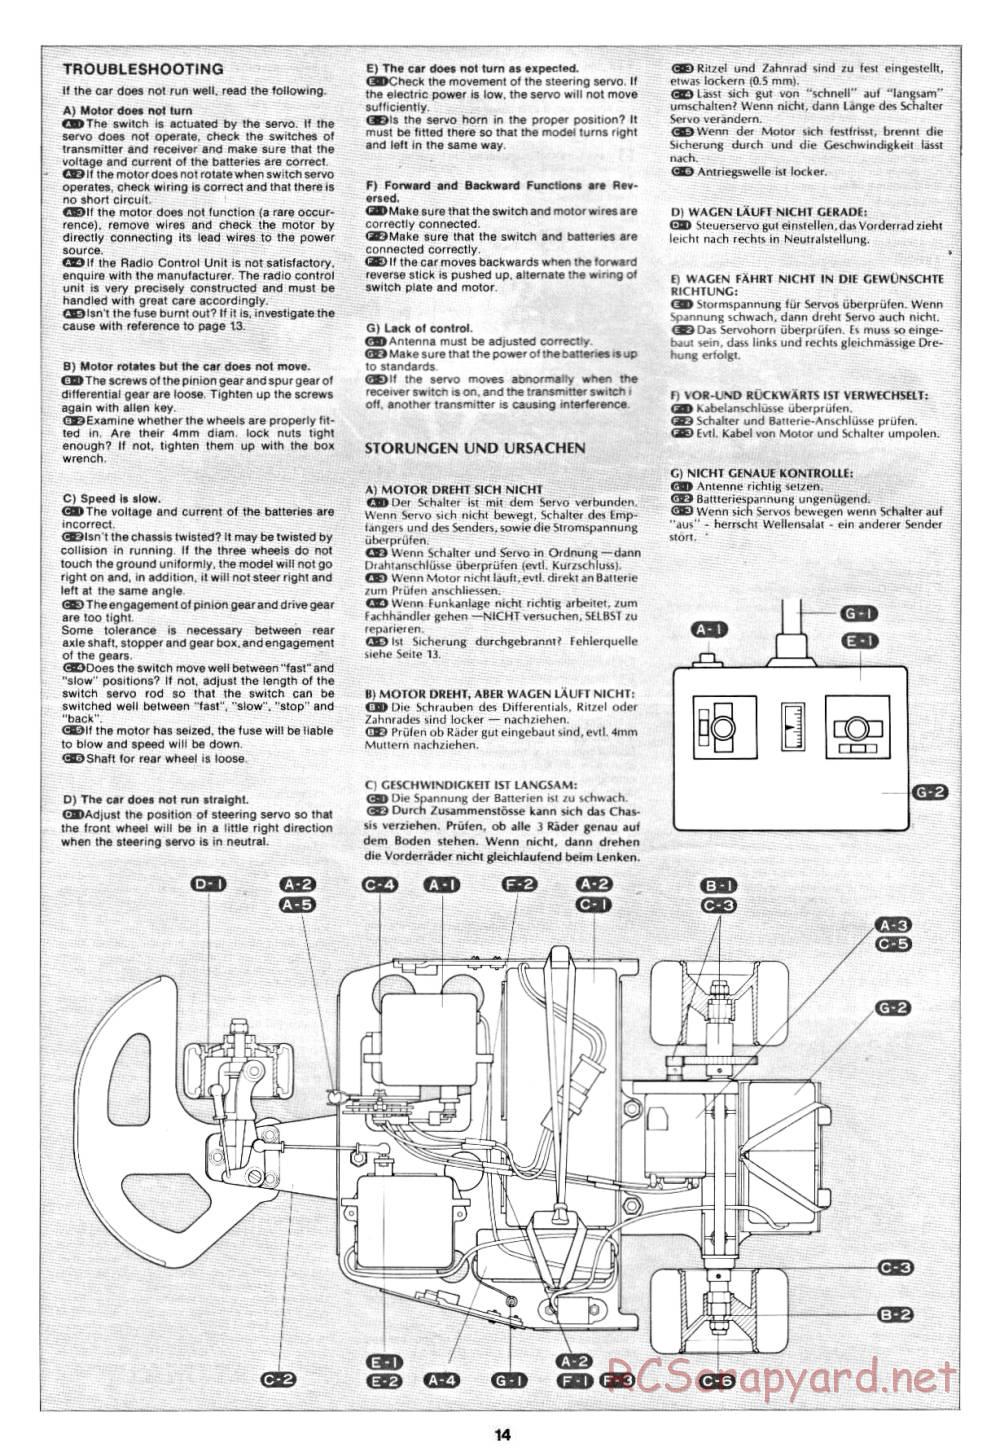 Tamiya - B2B Racing Sidecar - 58017 - Manual - Page 14